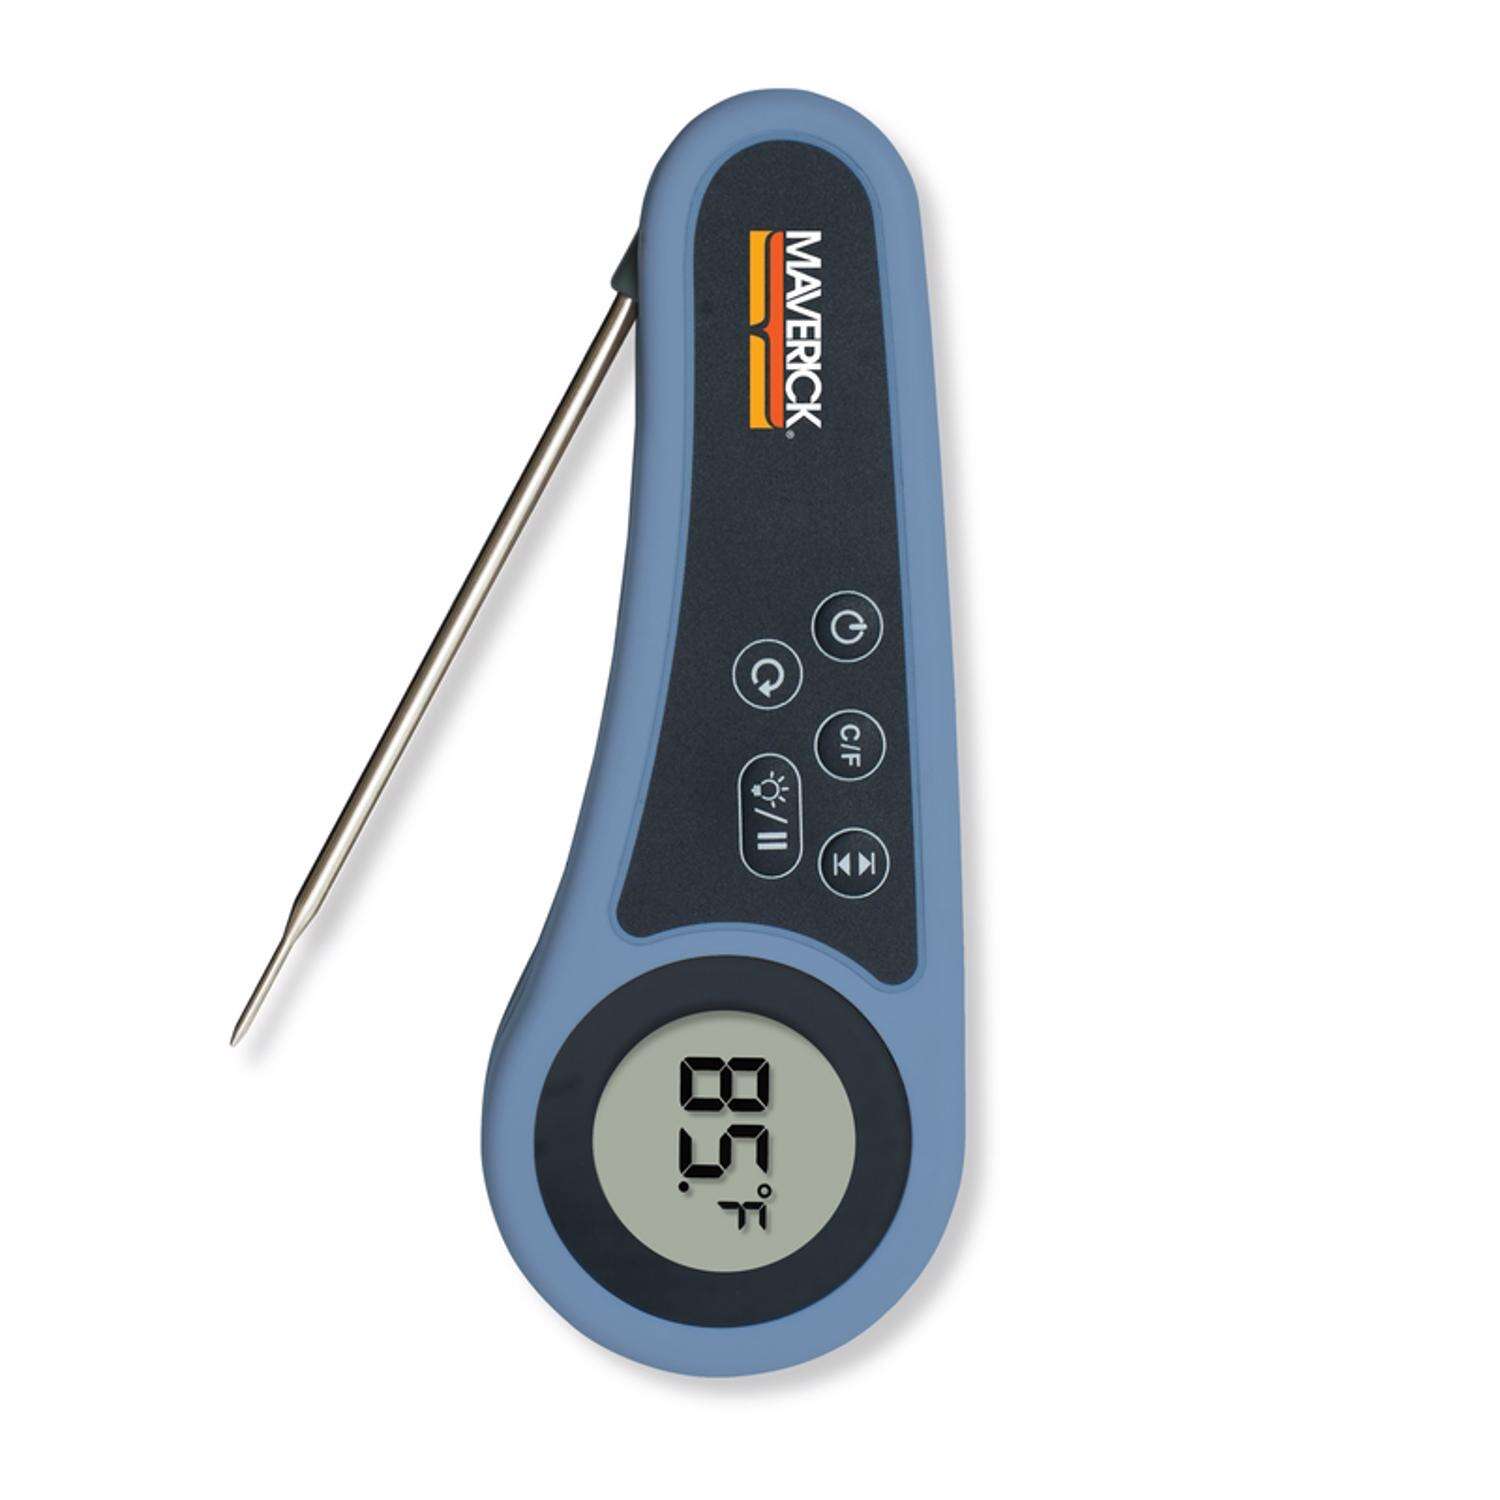 Maverick Digital Meat Thermometer (PT-55) $22.50 + free pickup at Ace Hardware